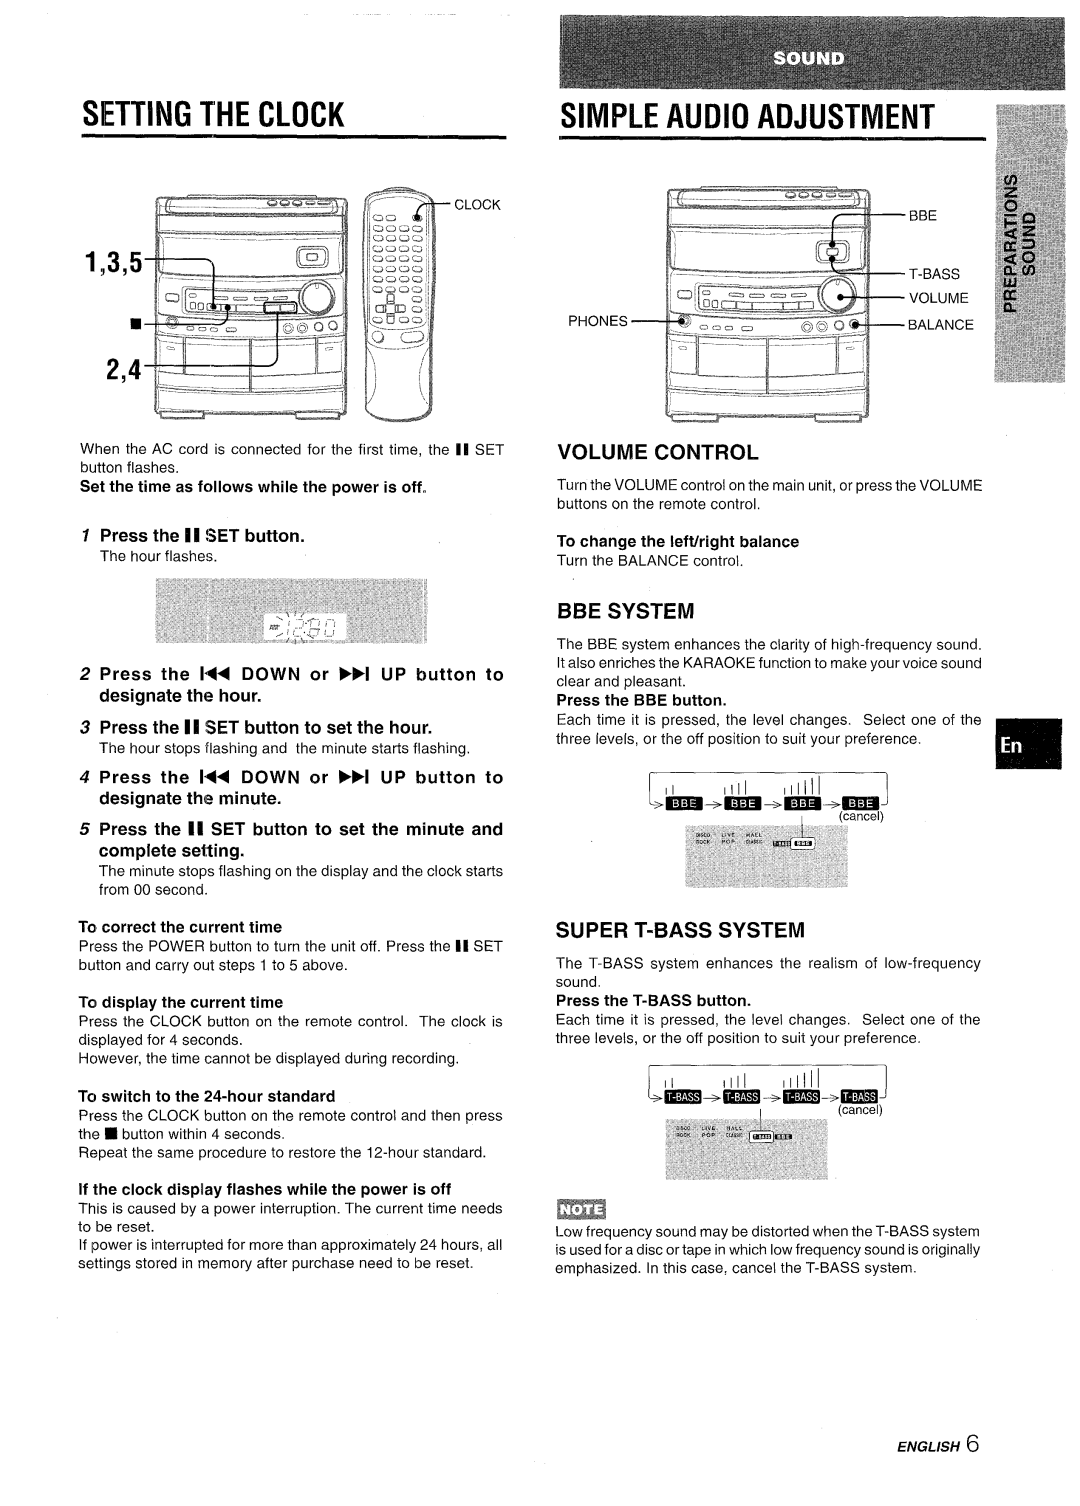 Aiwa NSX-AV800 manual Setting The Clock, 1,3,5..L- - -JI, Simple Audio Adjustment, Volume Control, Bbe System 